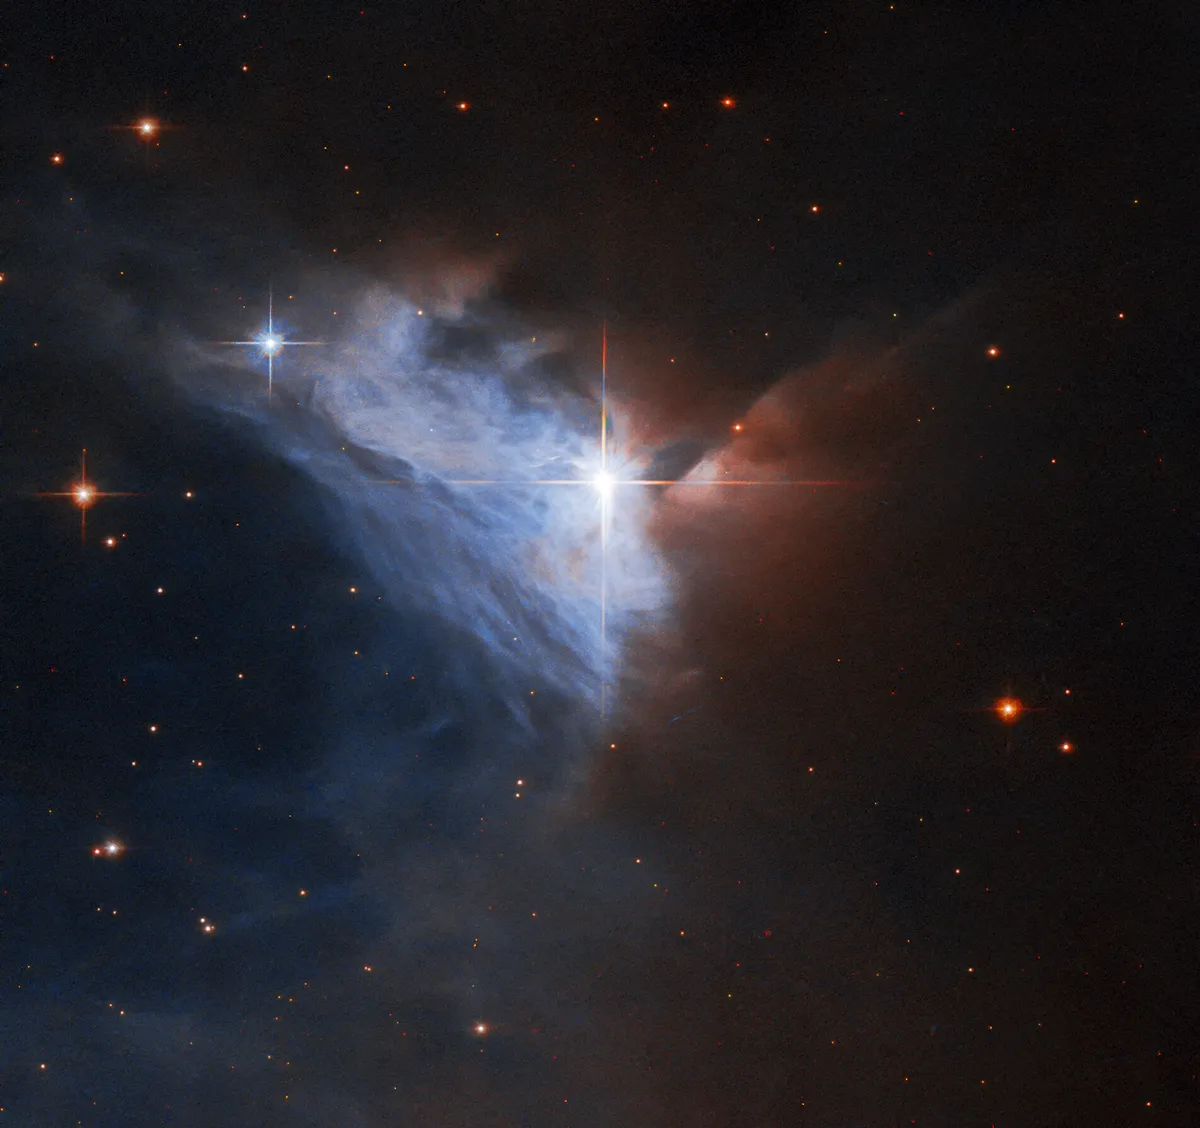 Emission nebula NGC 2313 HUBBLE SPACE TELESCOPE, 10 MAY 2021 CREDIT: ESA/Hubble, R. Sahai